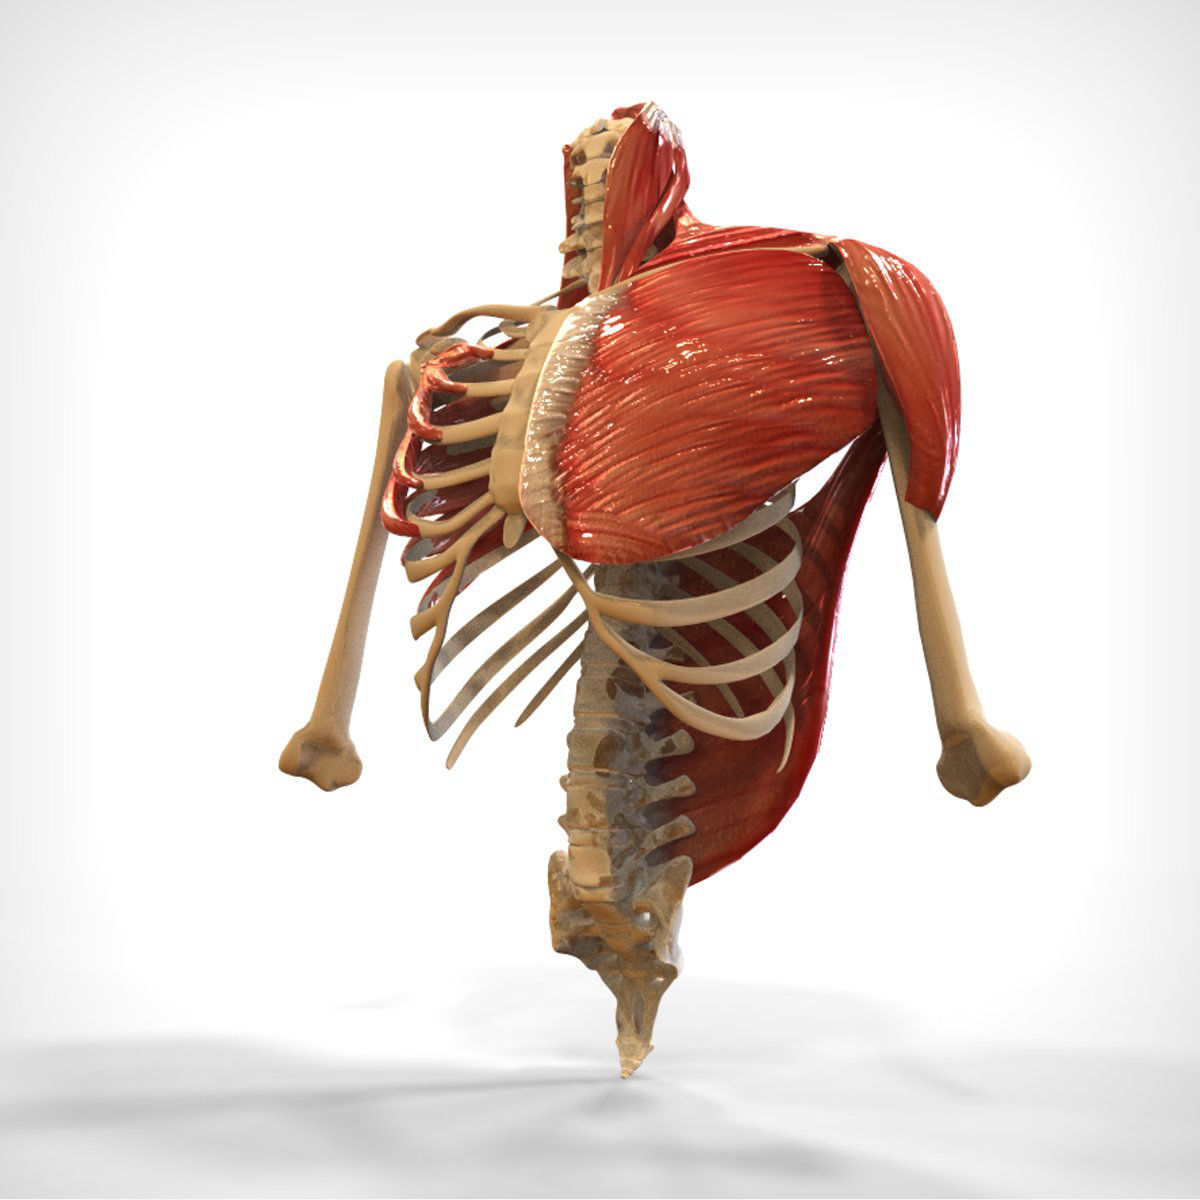 Bones and muscles. Скелет с мышцами. Скелет мускулатура. Мышцы и кости. 3д модель мышцы и скелет.